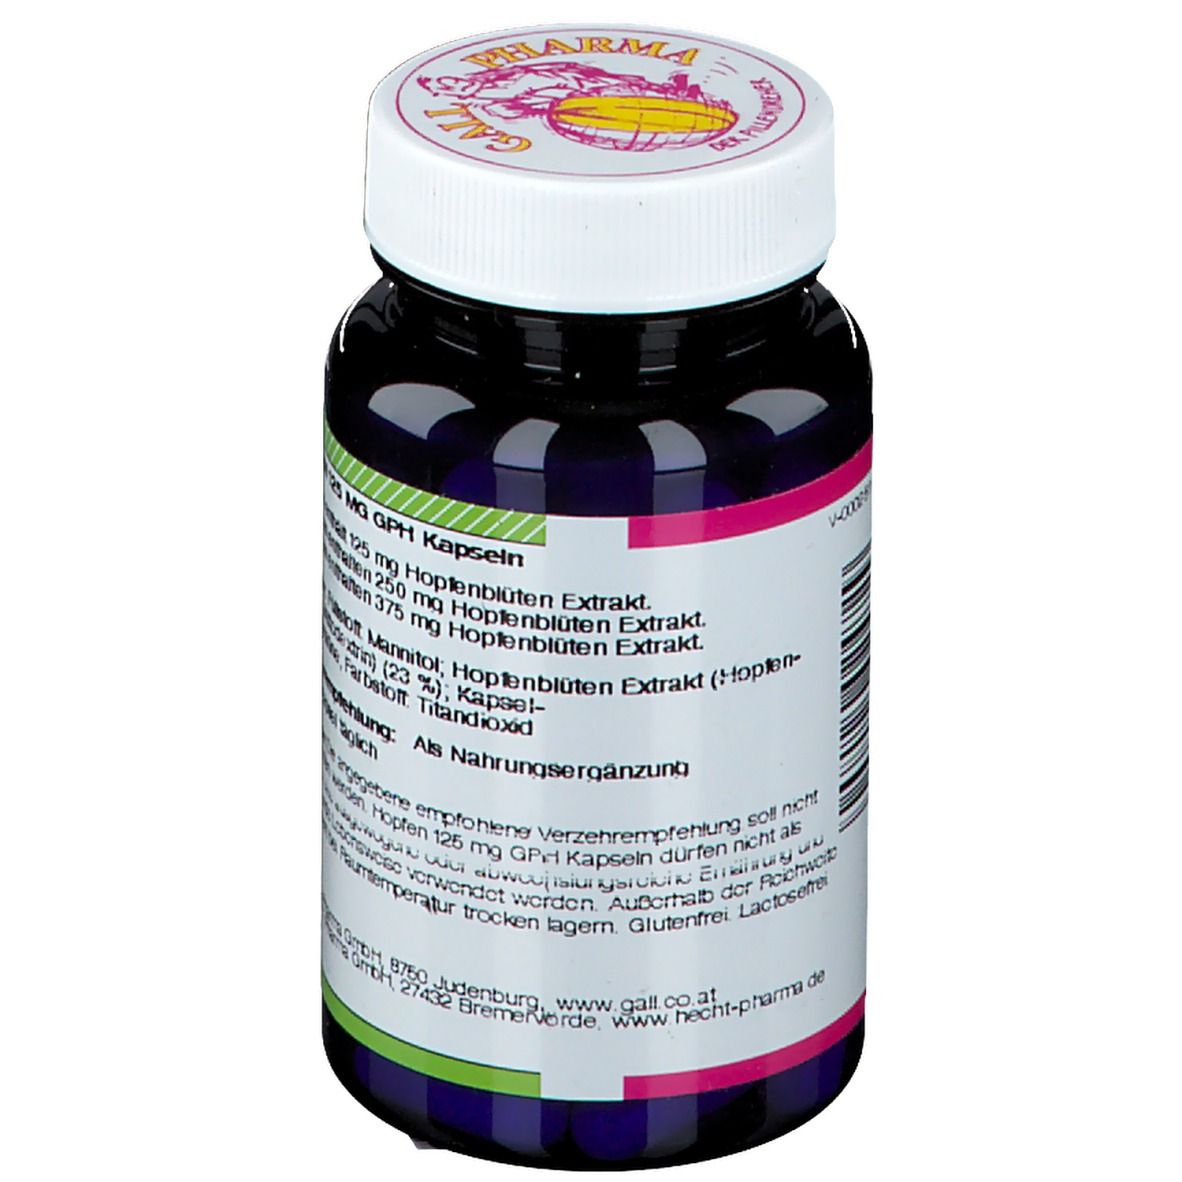 GALL PHARMA Hopfen 125 mg GPH Kapseln